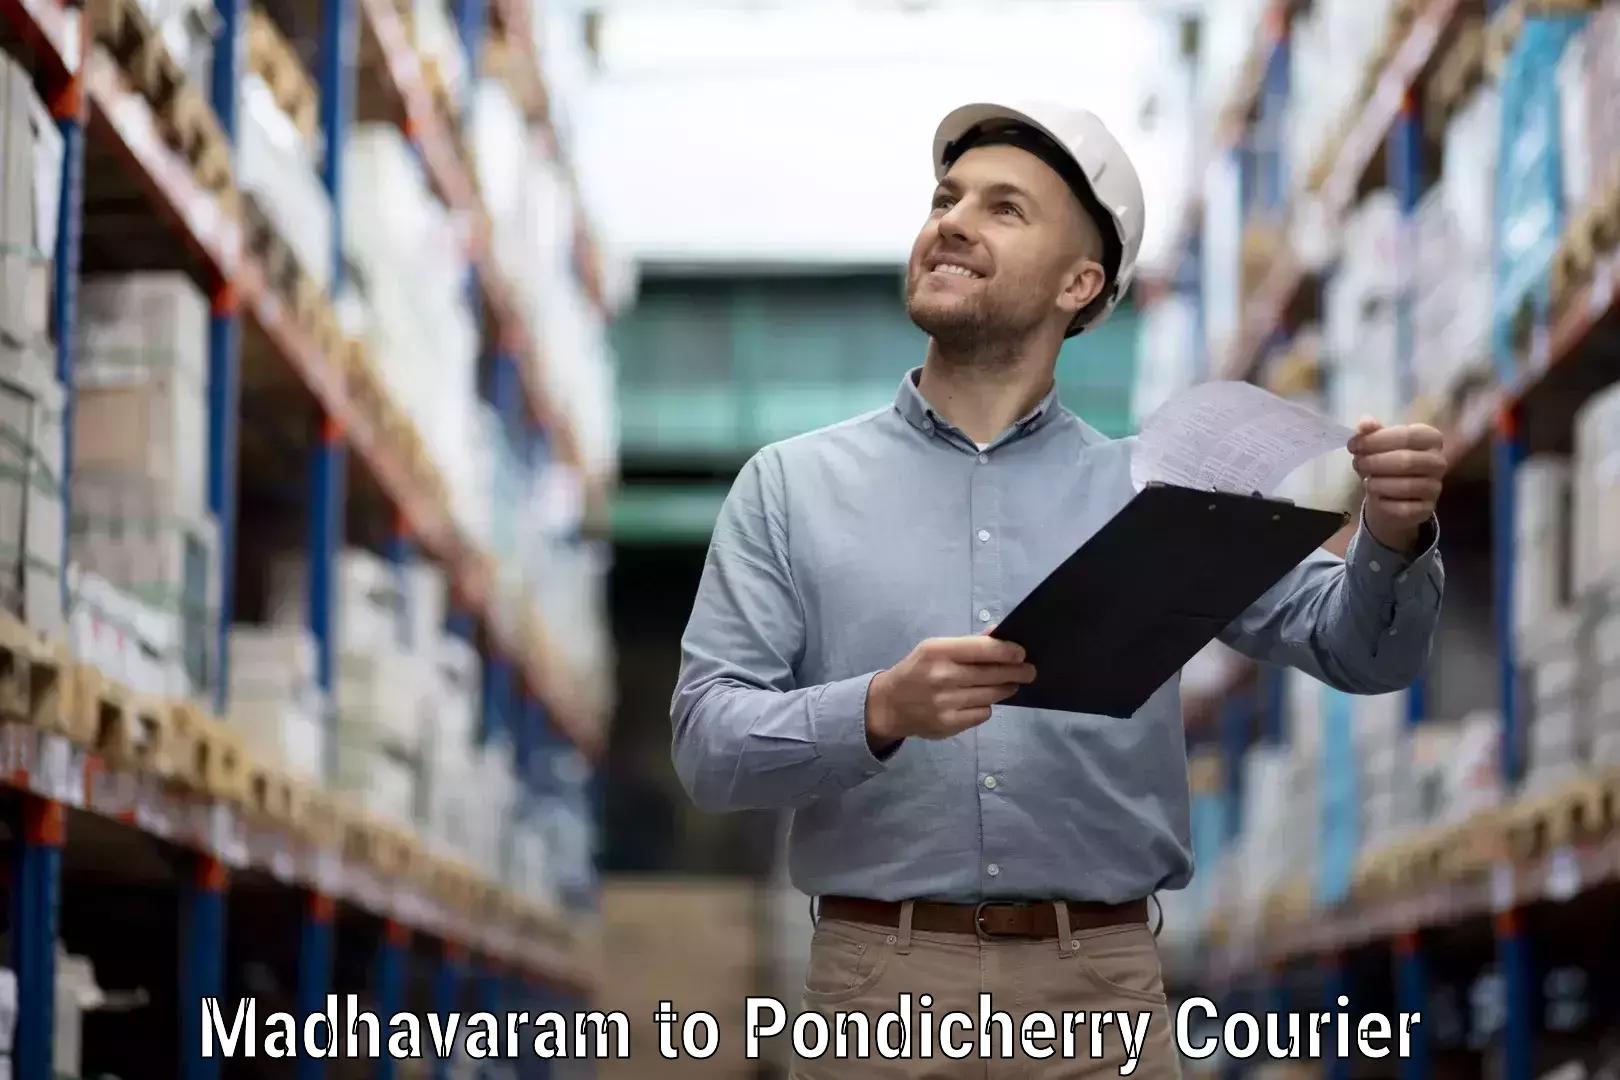 Customer-focused courier Madhavaram to Pondicherry